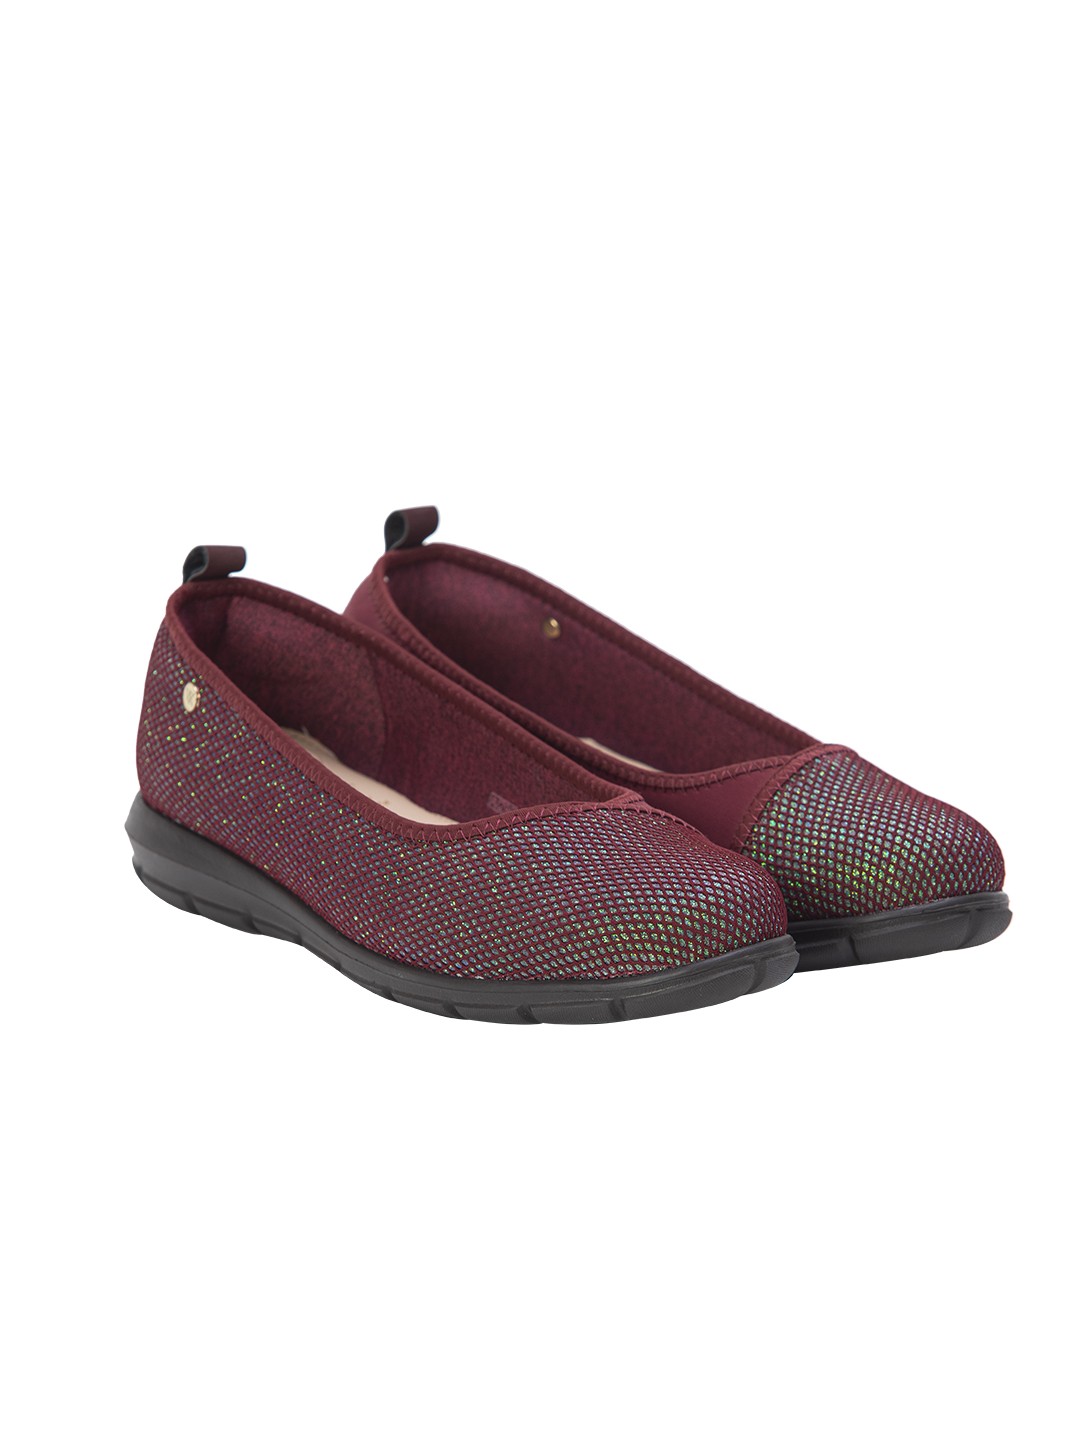 Buy Von Wellx Germany Comfort Pace Mehroon Casual Shoes Online in Salalah